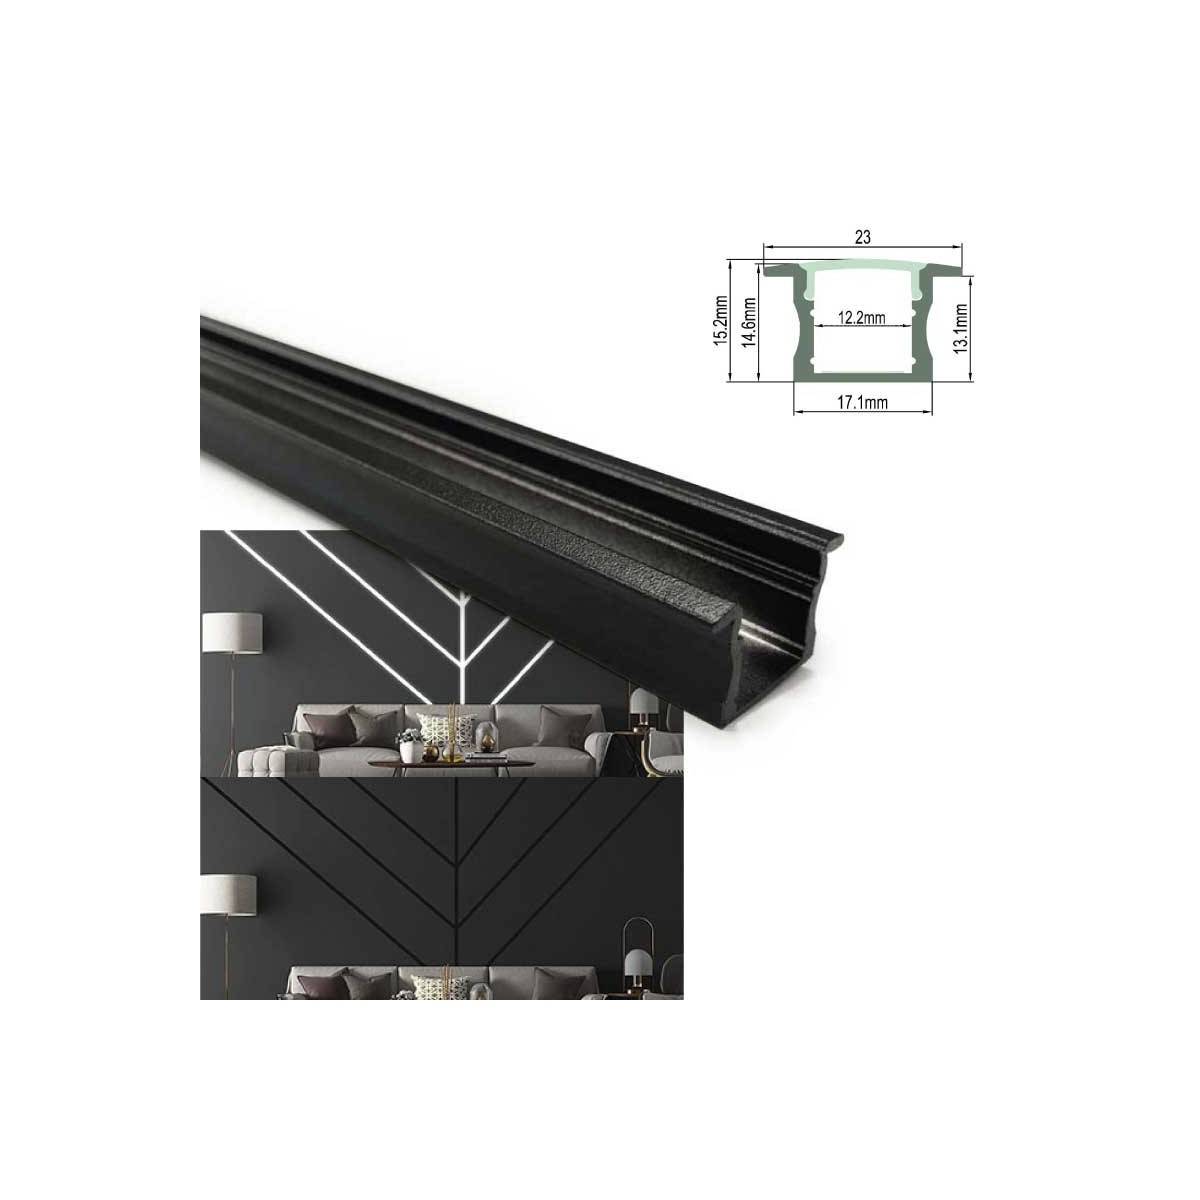 Perfil de aluminio superficie lacado NEGRO para tira LED 17x15mm - 2 metros